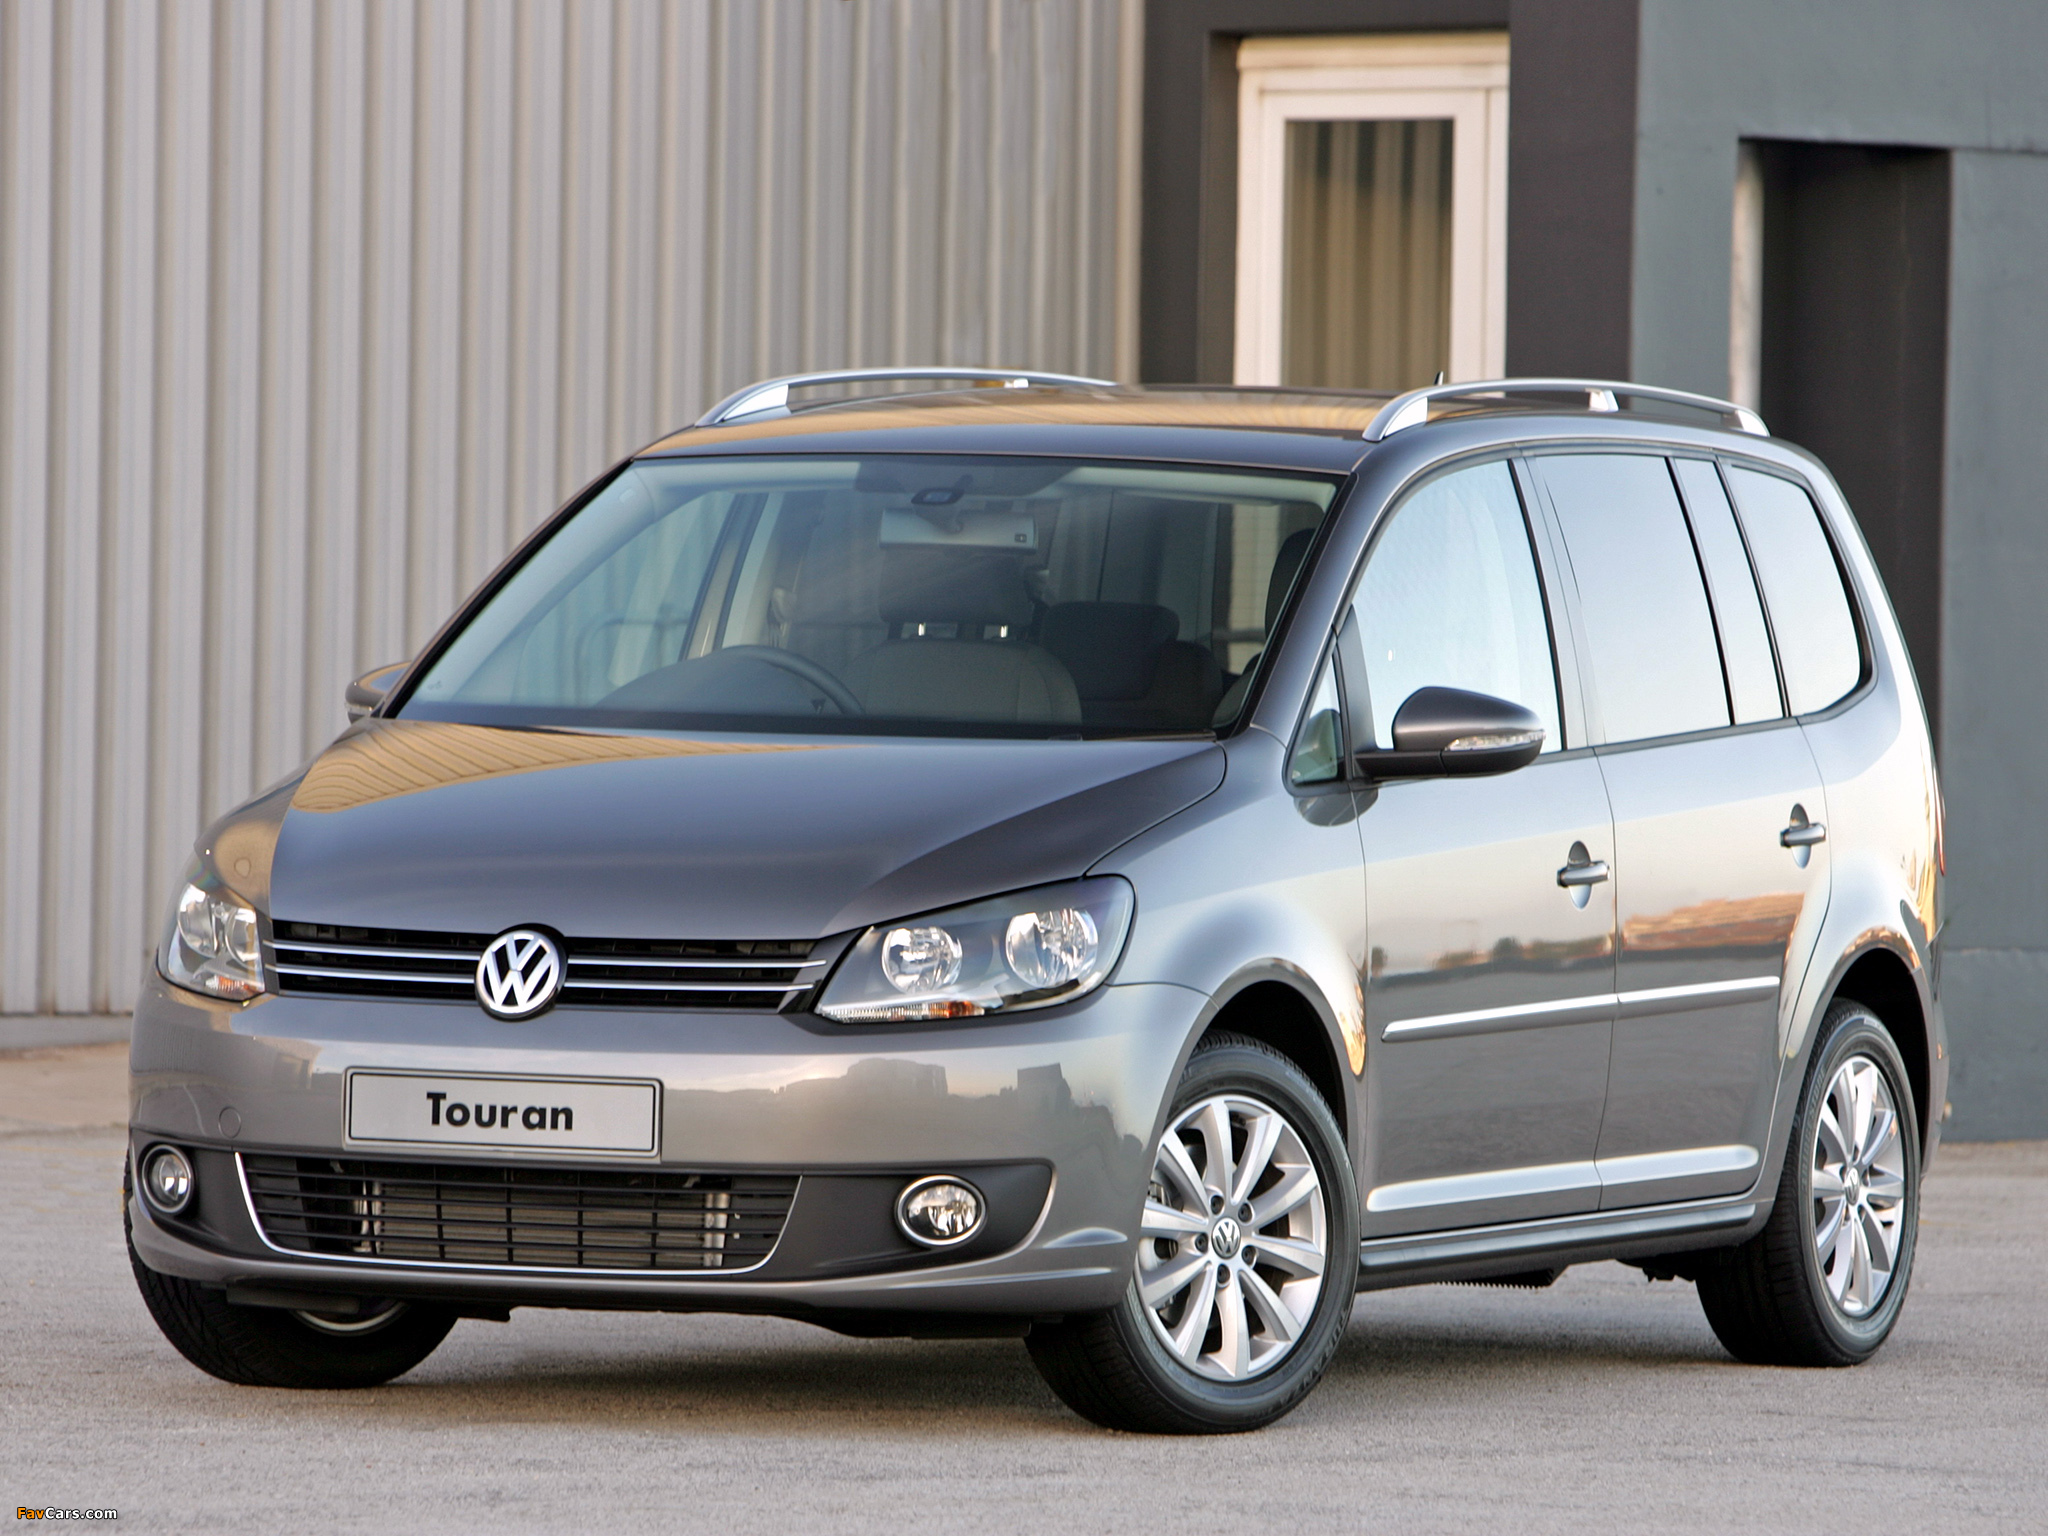 Диагностика Volkswagen Touran года для клиента и Кургана.